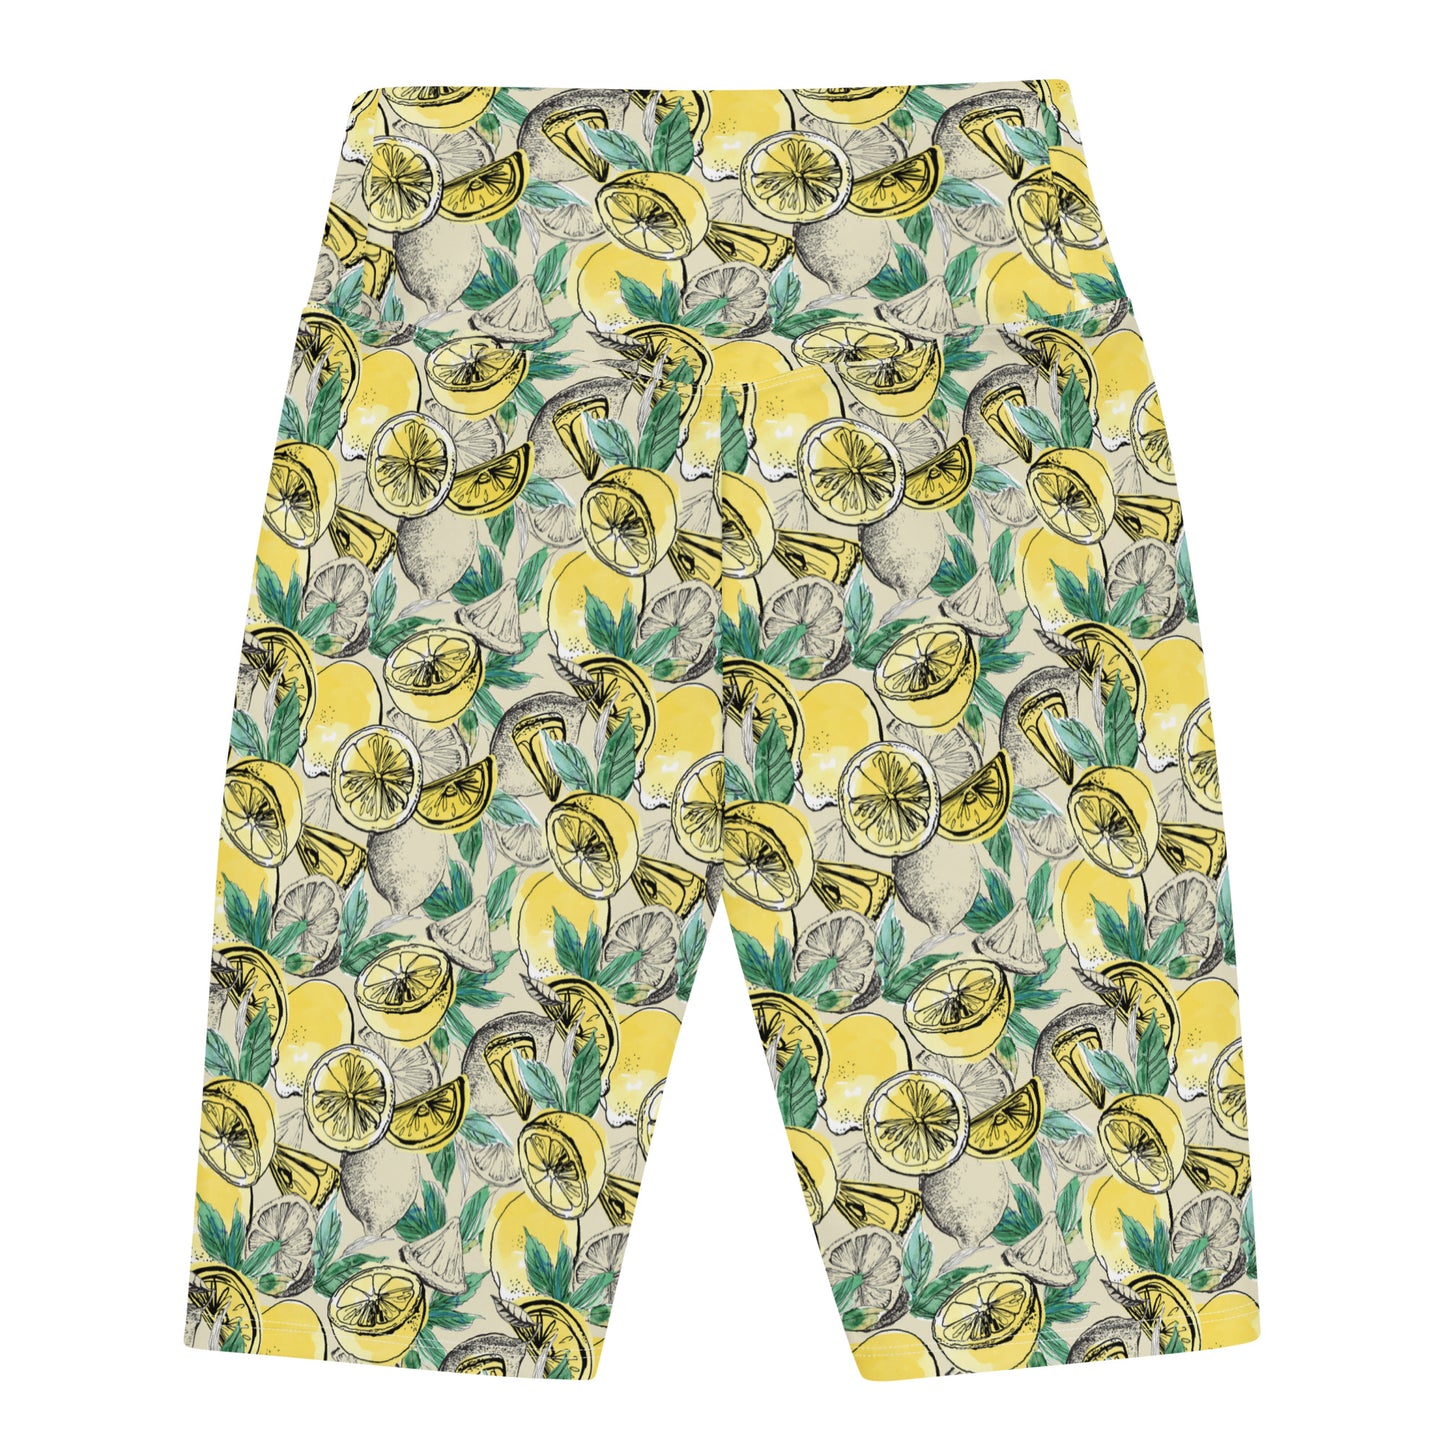 Citrus Splash Yellow High-Waisted Biker Shorts